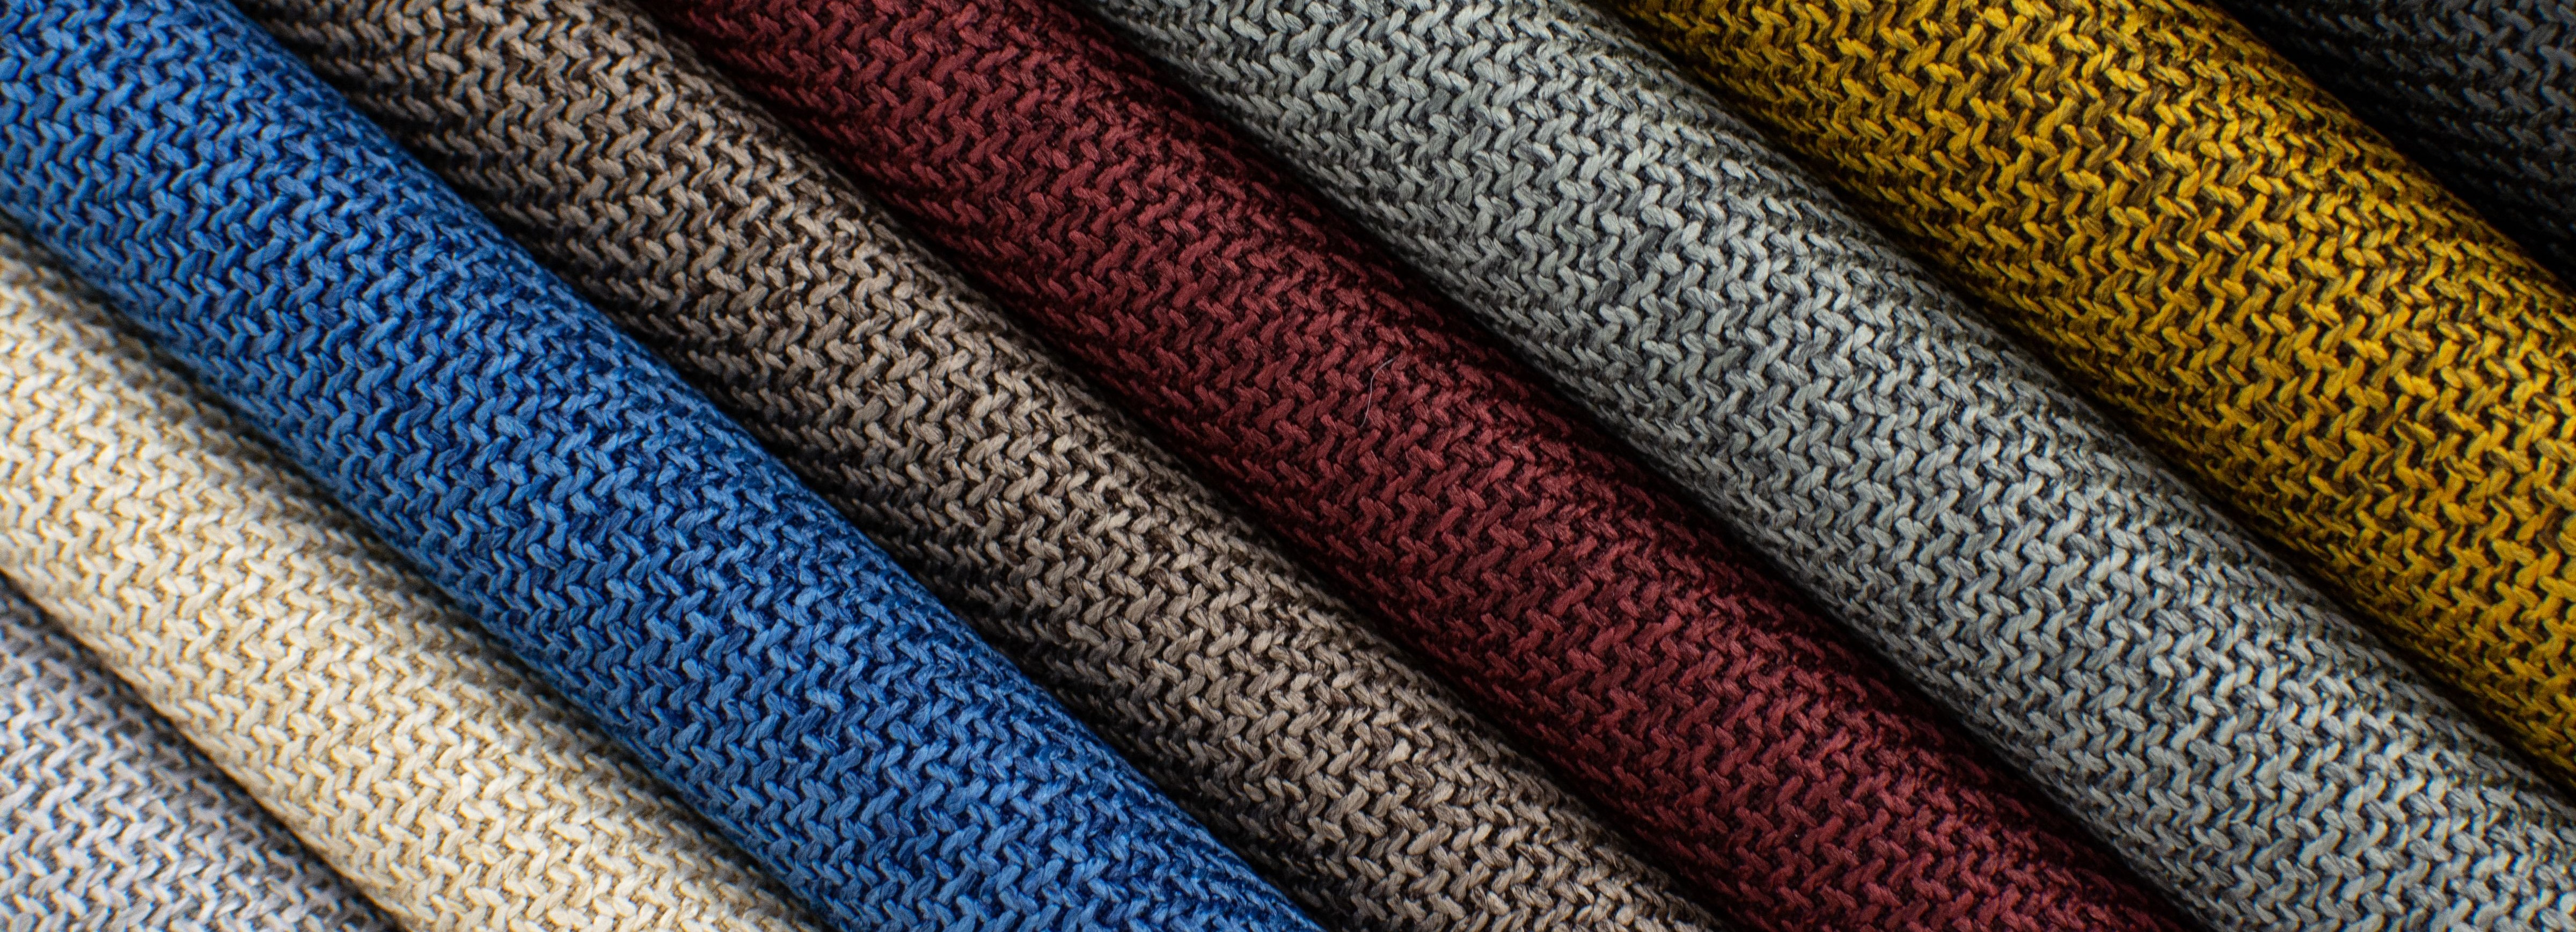 parallel fabrics by fabricmate